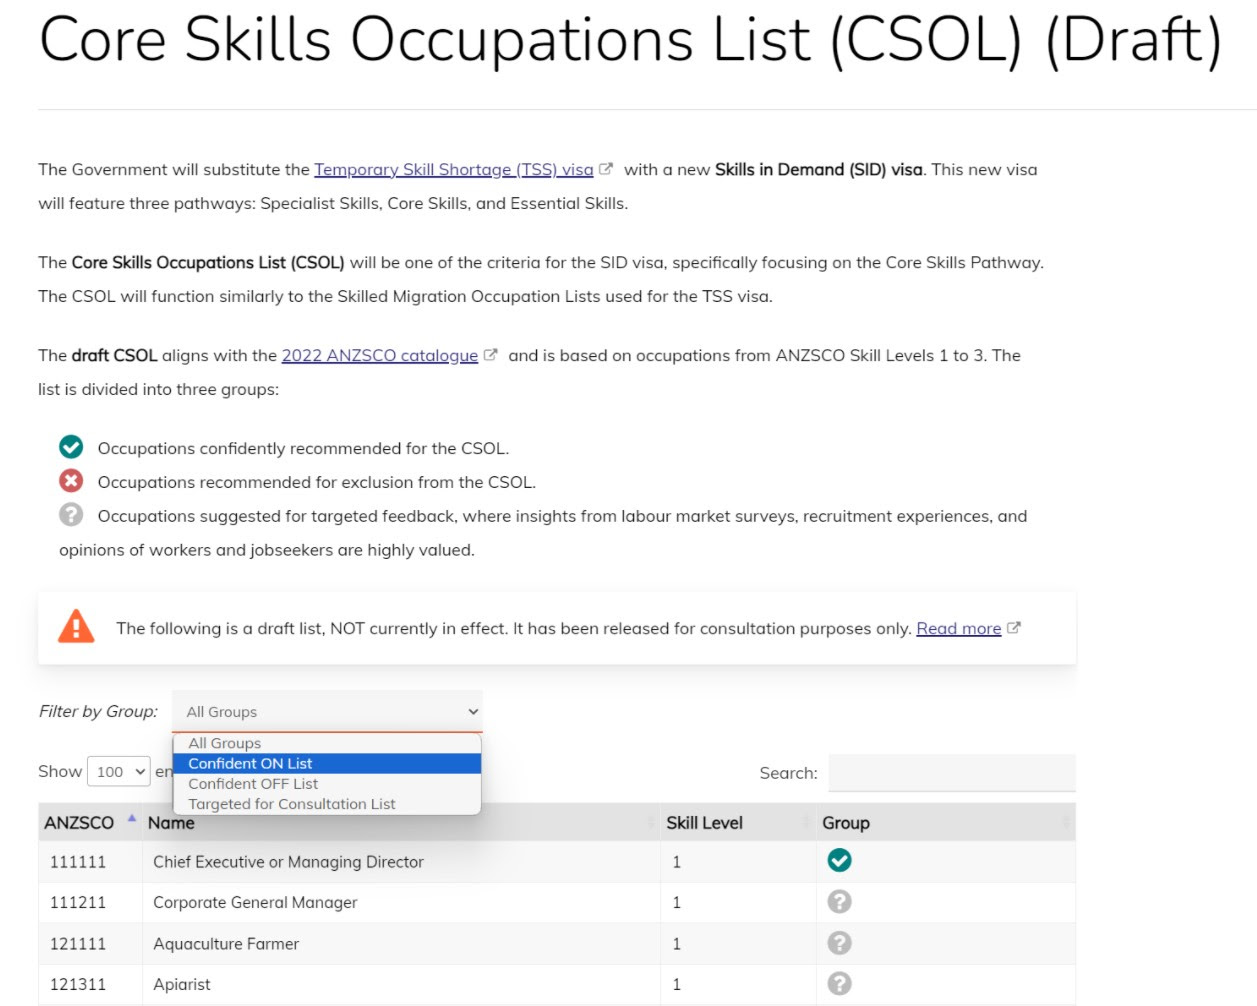 Core Skills Occupations List (CSOL)